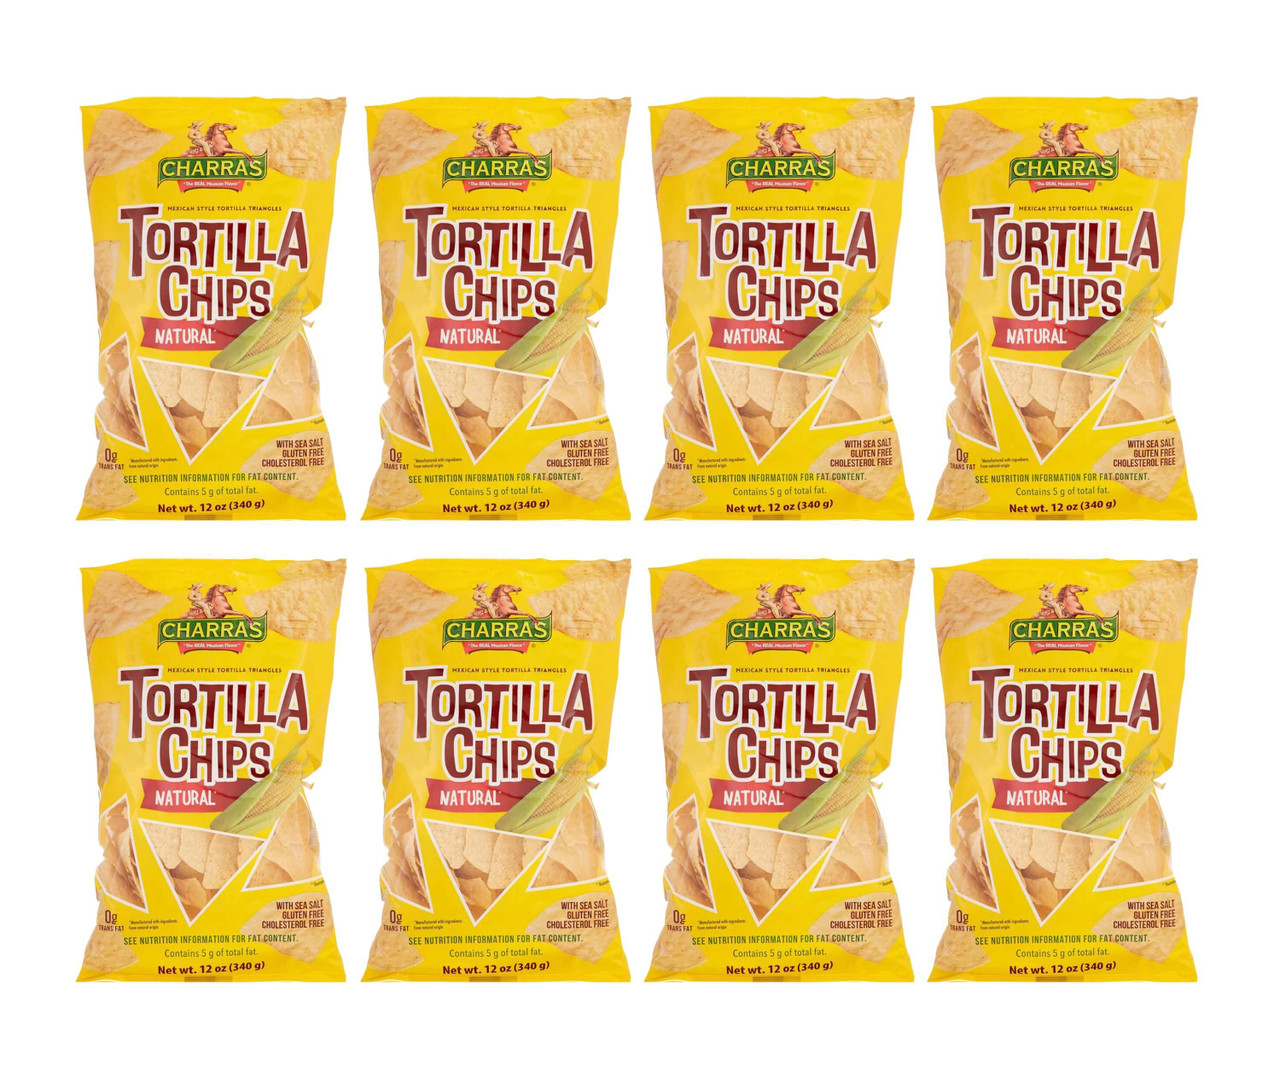 Charras Tortilla Chips Natural 12 oz/(8-Case) - Original Flavor Corn Chips
-Chicken Pieces